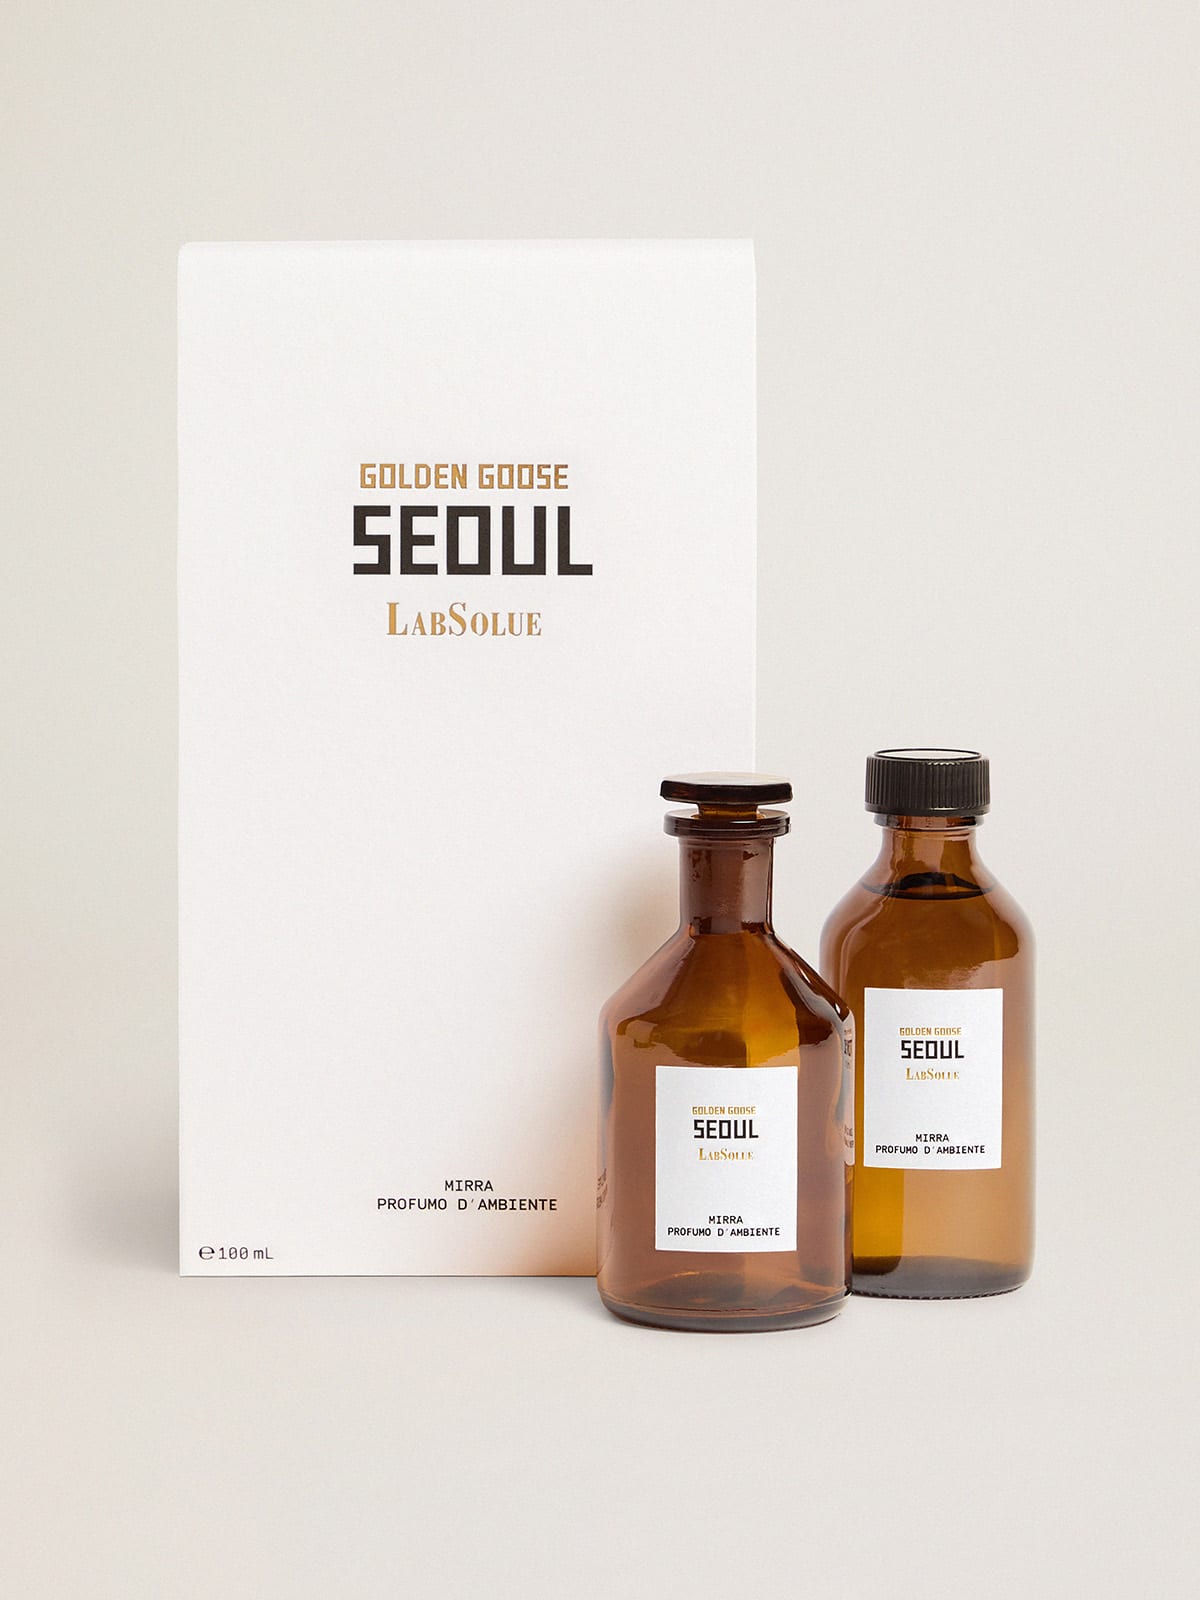 Golden Goose - Seoul Essence Myrrh Diffuser 100 ml in 